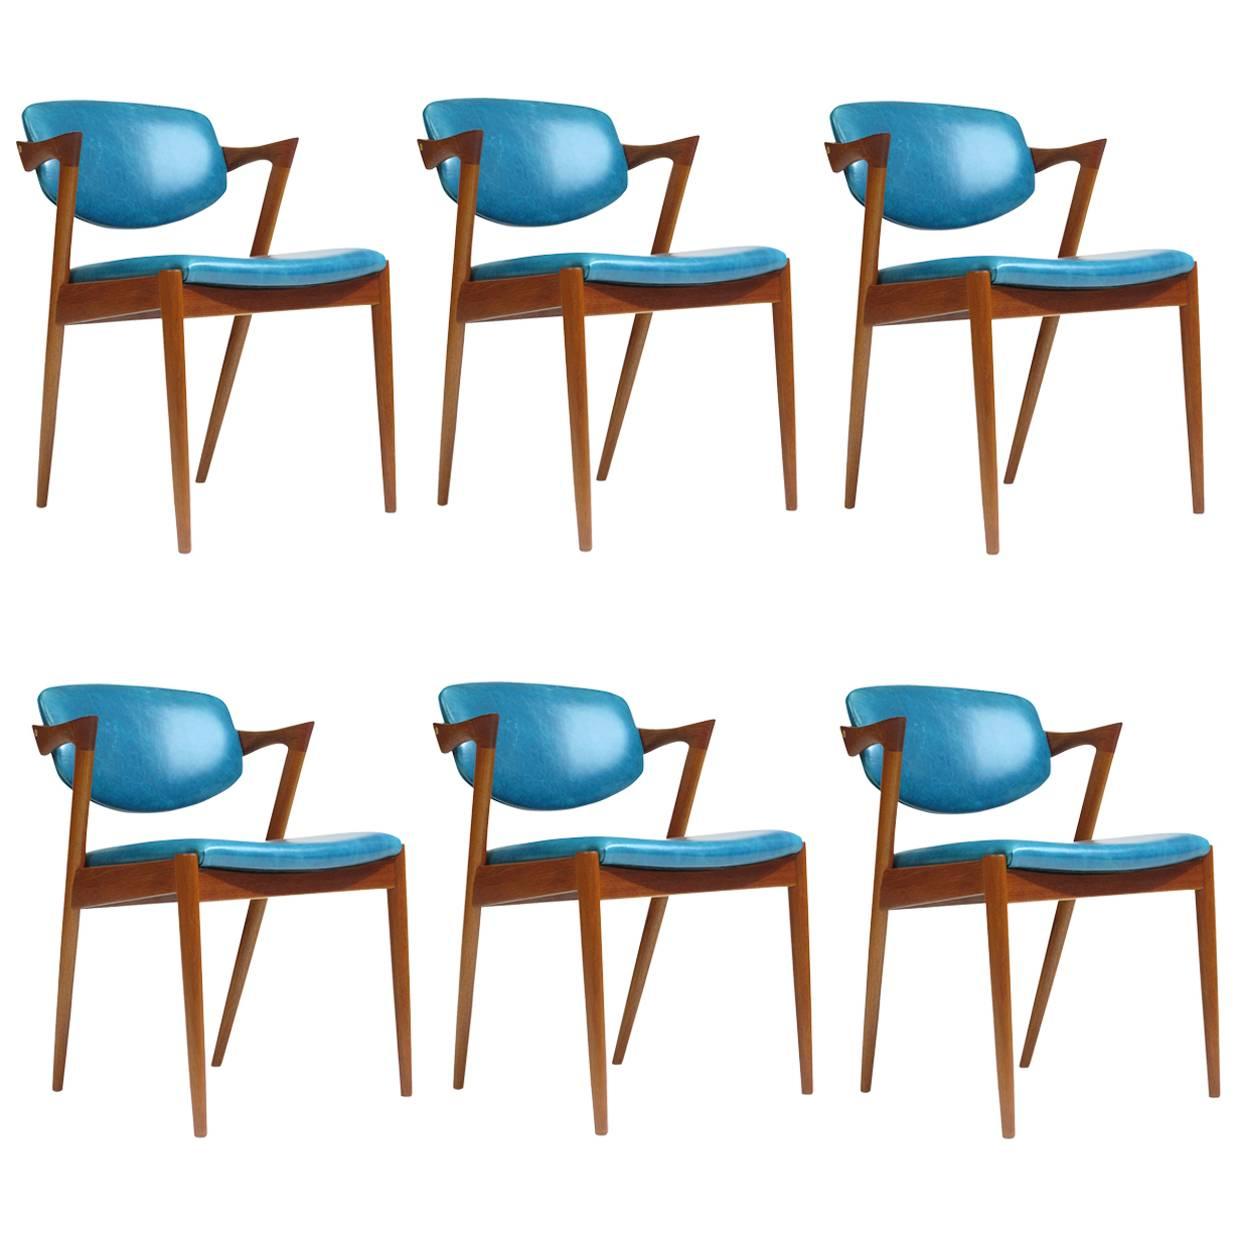 Six Kai Kristiansen Teak Danish Dining Chairs in Turquoise Leather, 20 Available